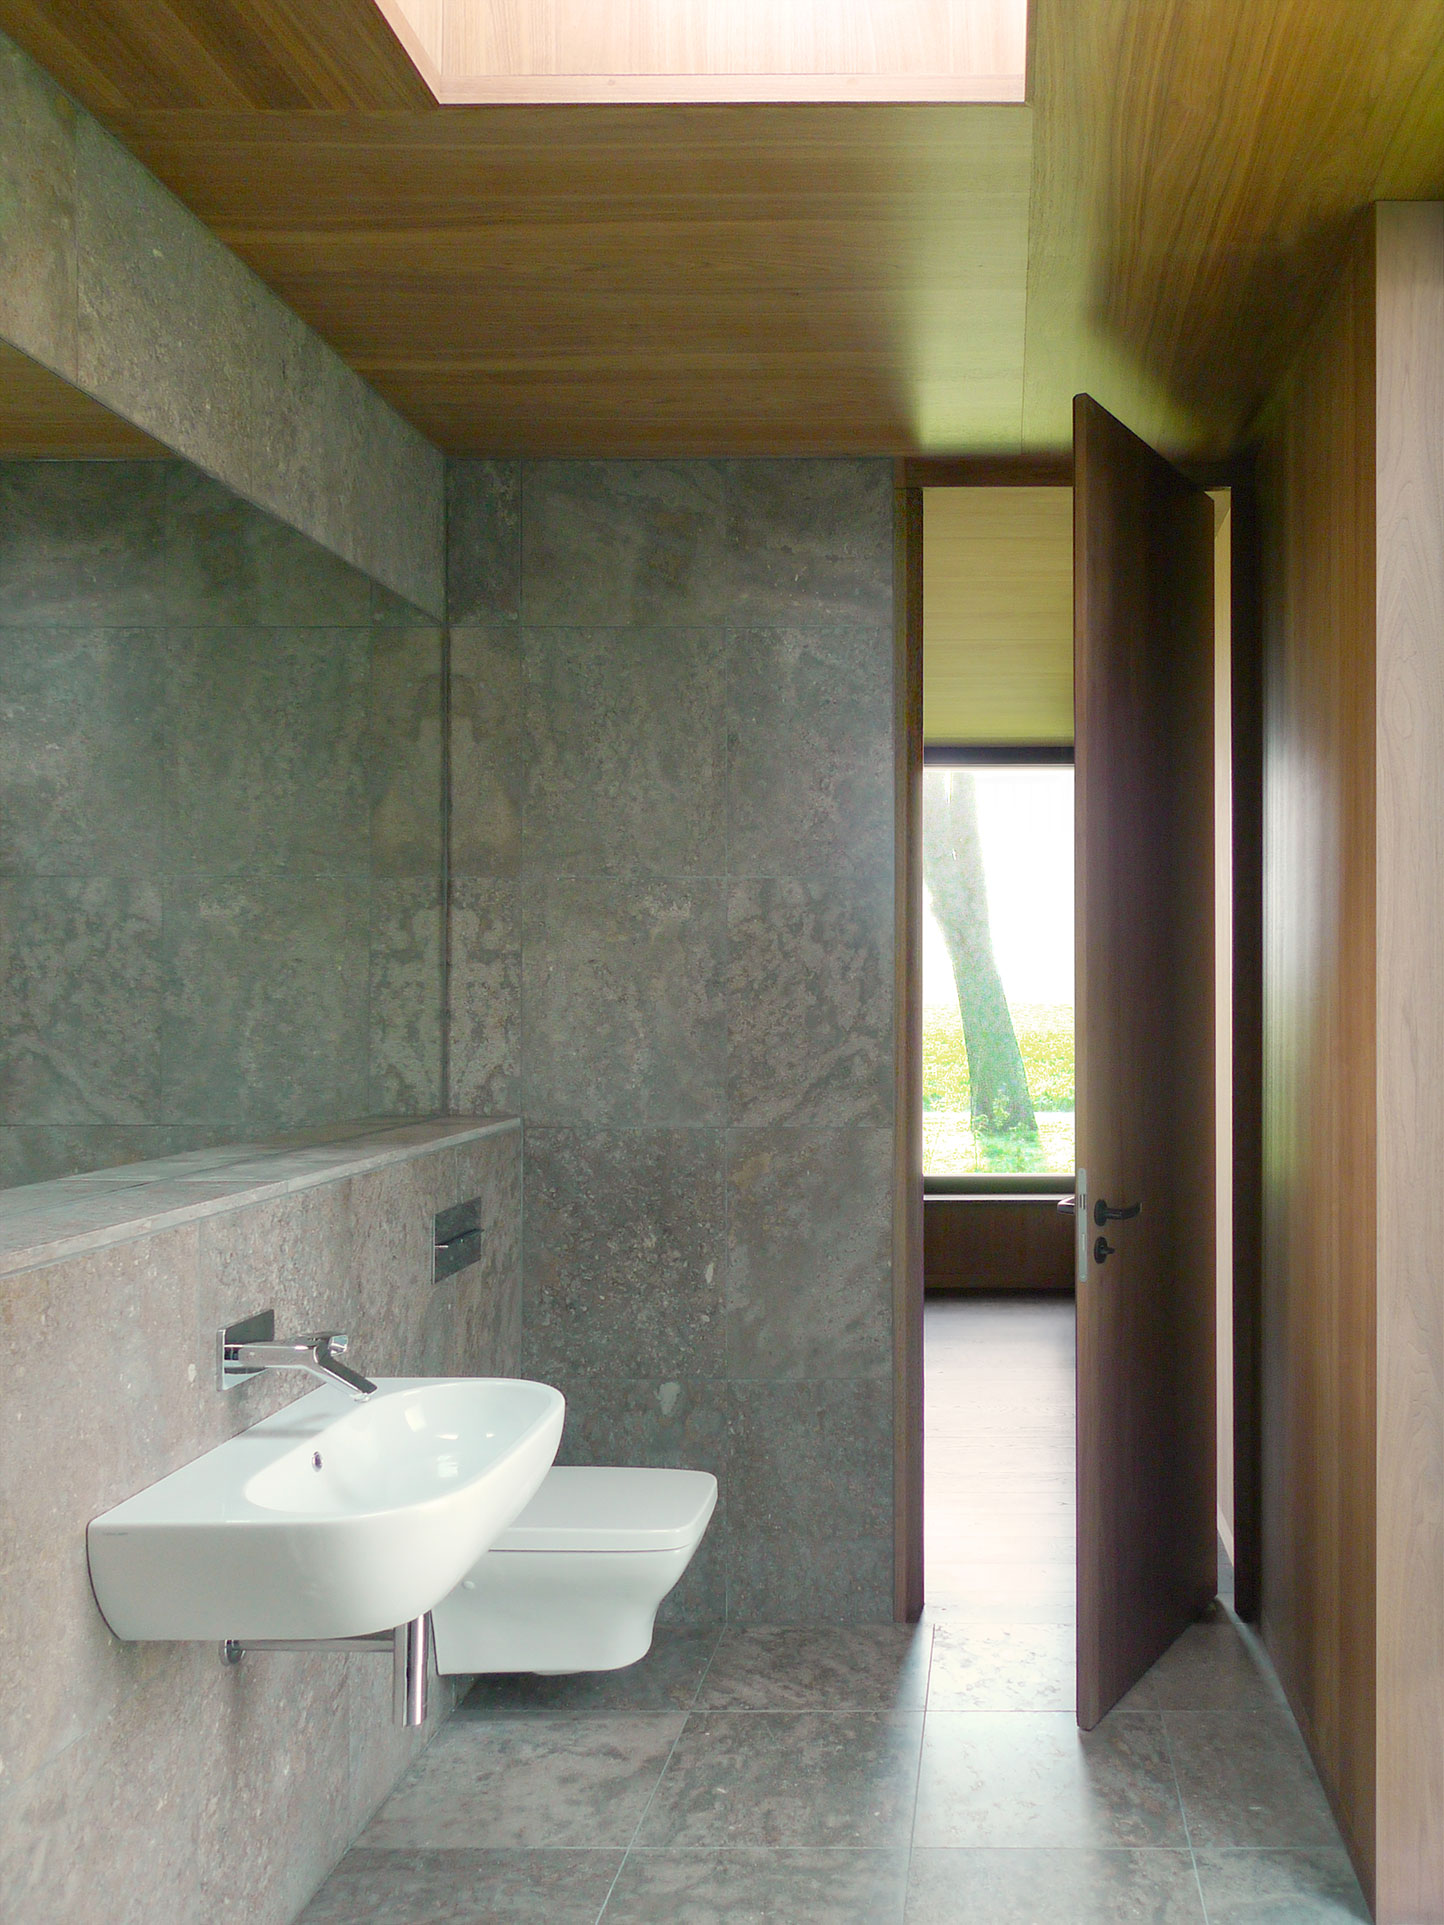 Image no. 6 of Custom Ofuro wooden bathtub - Diener und Diener